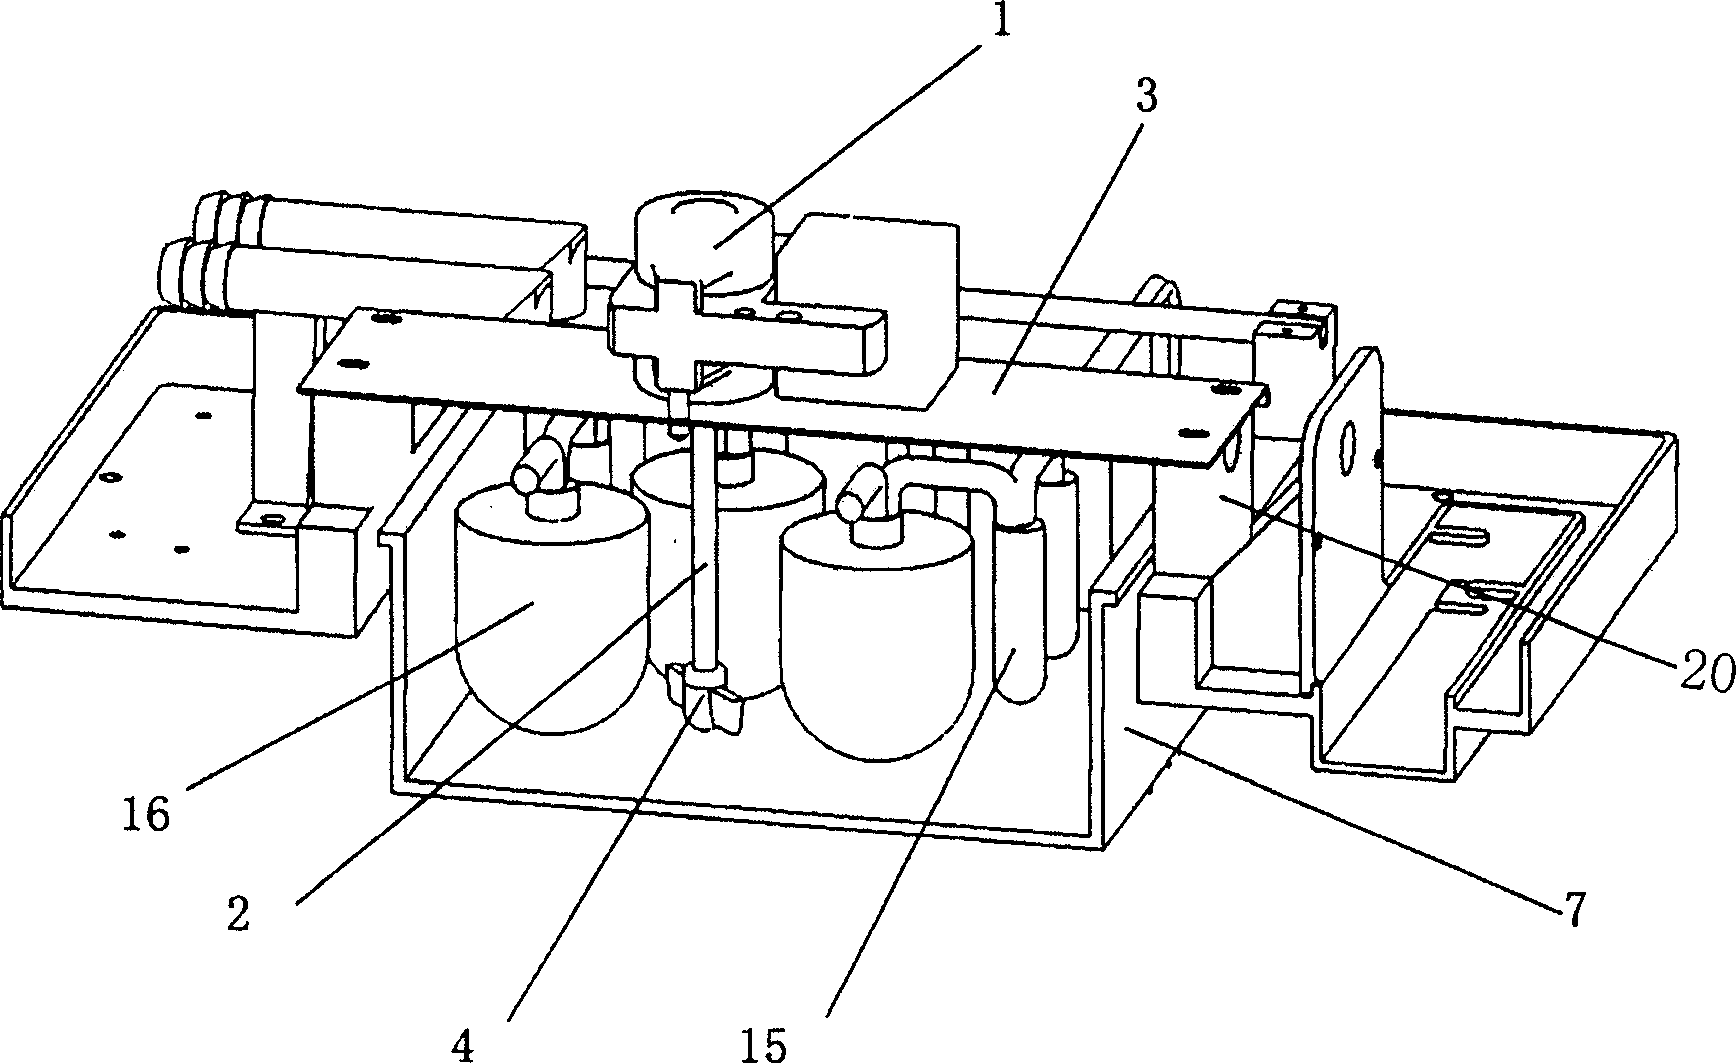 Water stirring mechanism for ice-making machine